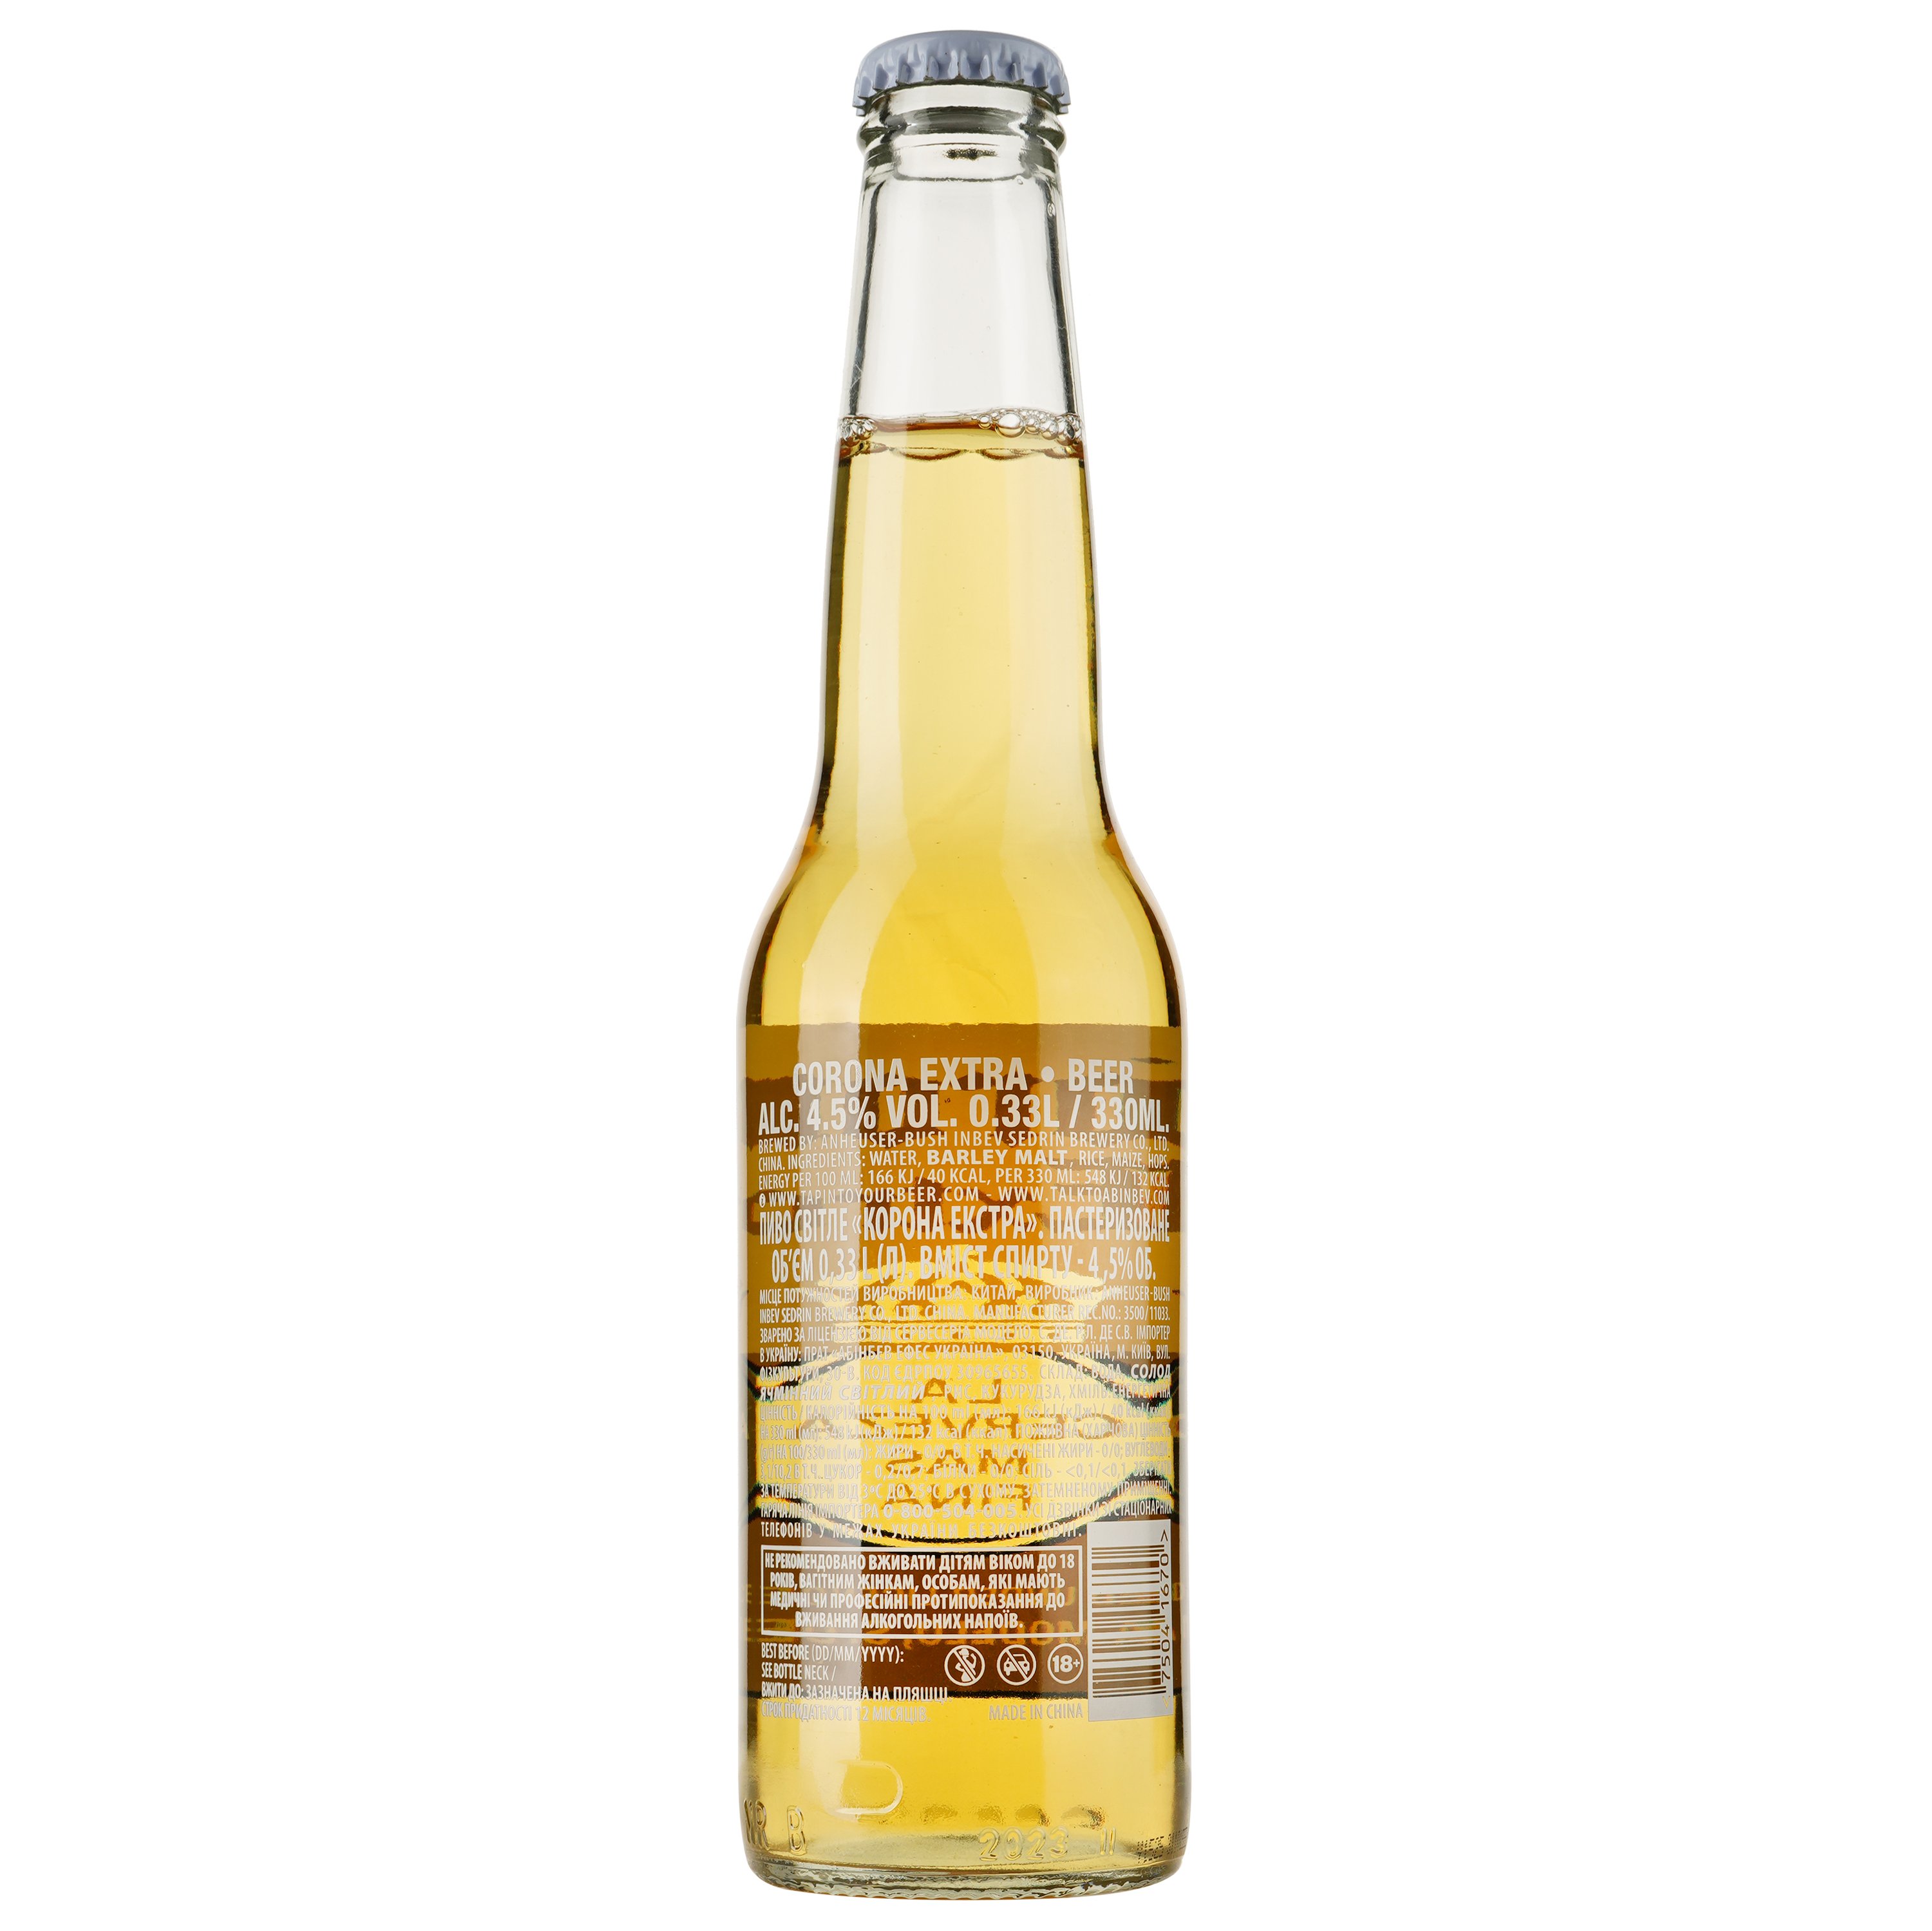 Пиво Corona Extra светлое пастеризованное 4.5% 0.33 л (839544) - фото 2